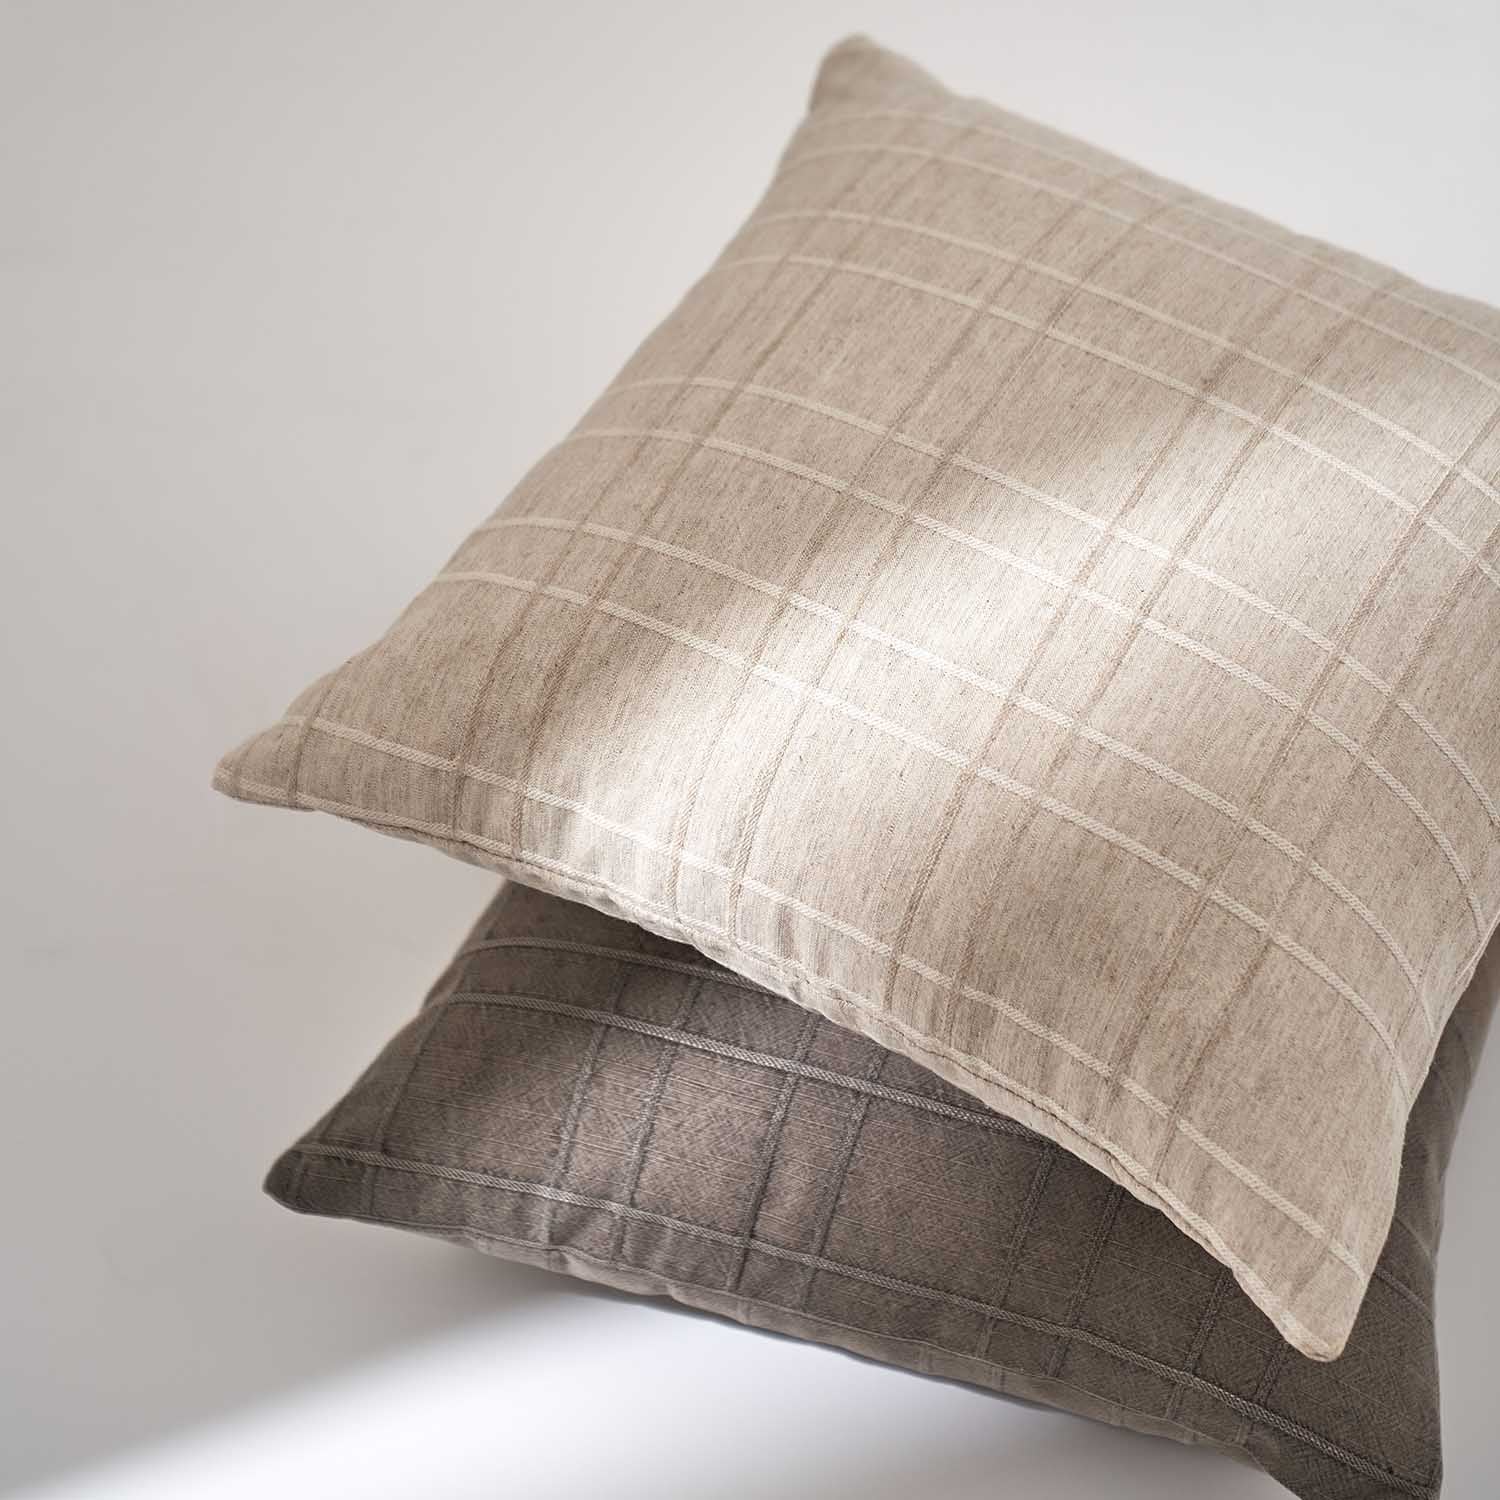 Crema Plaid Cotton Decorative Pillow Cover-